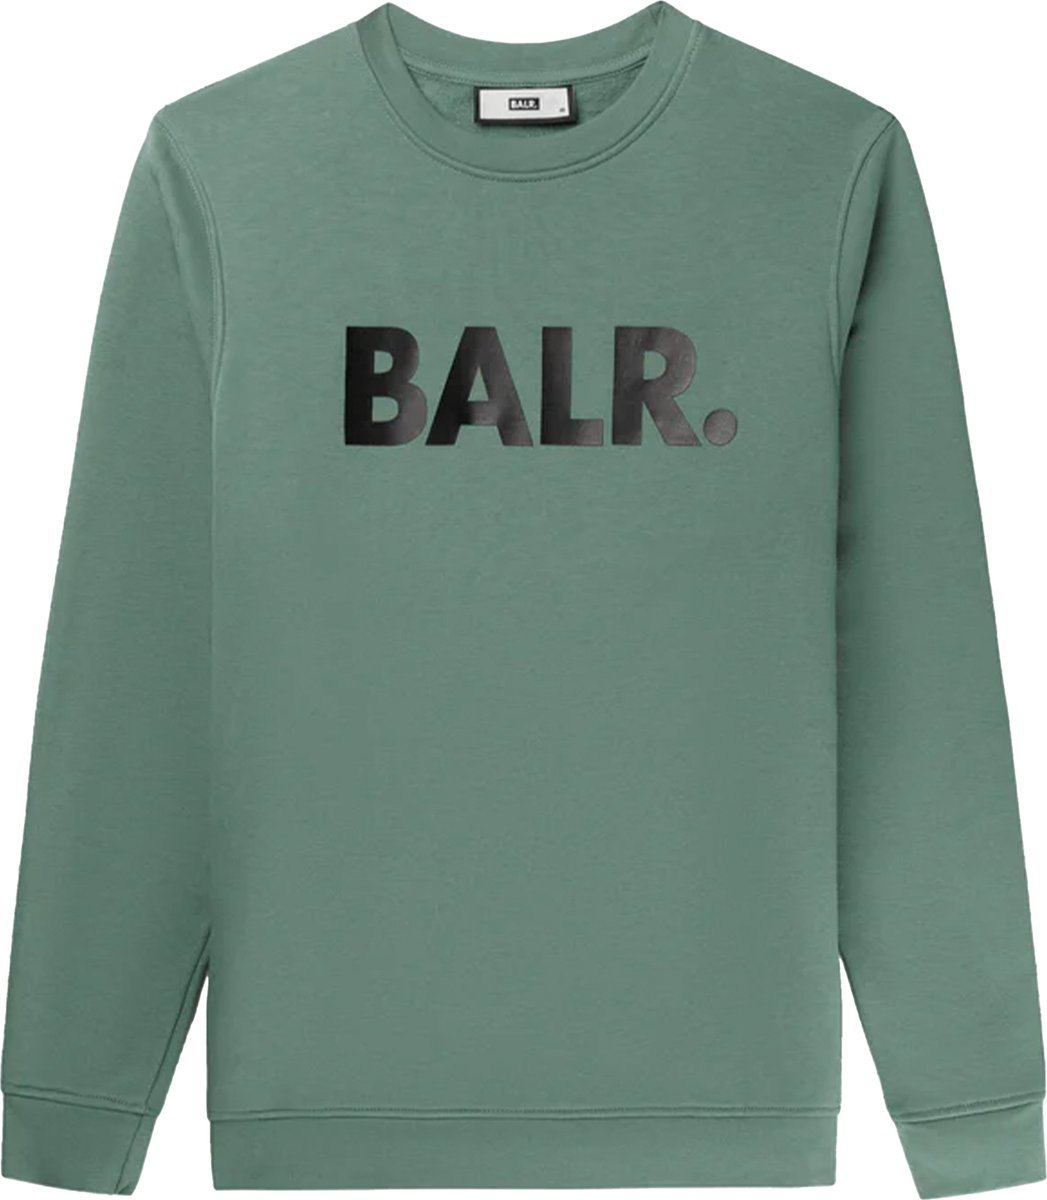 BALR. Trui Groen Katoen maat XL Brand straight crewneck sweaters groen